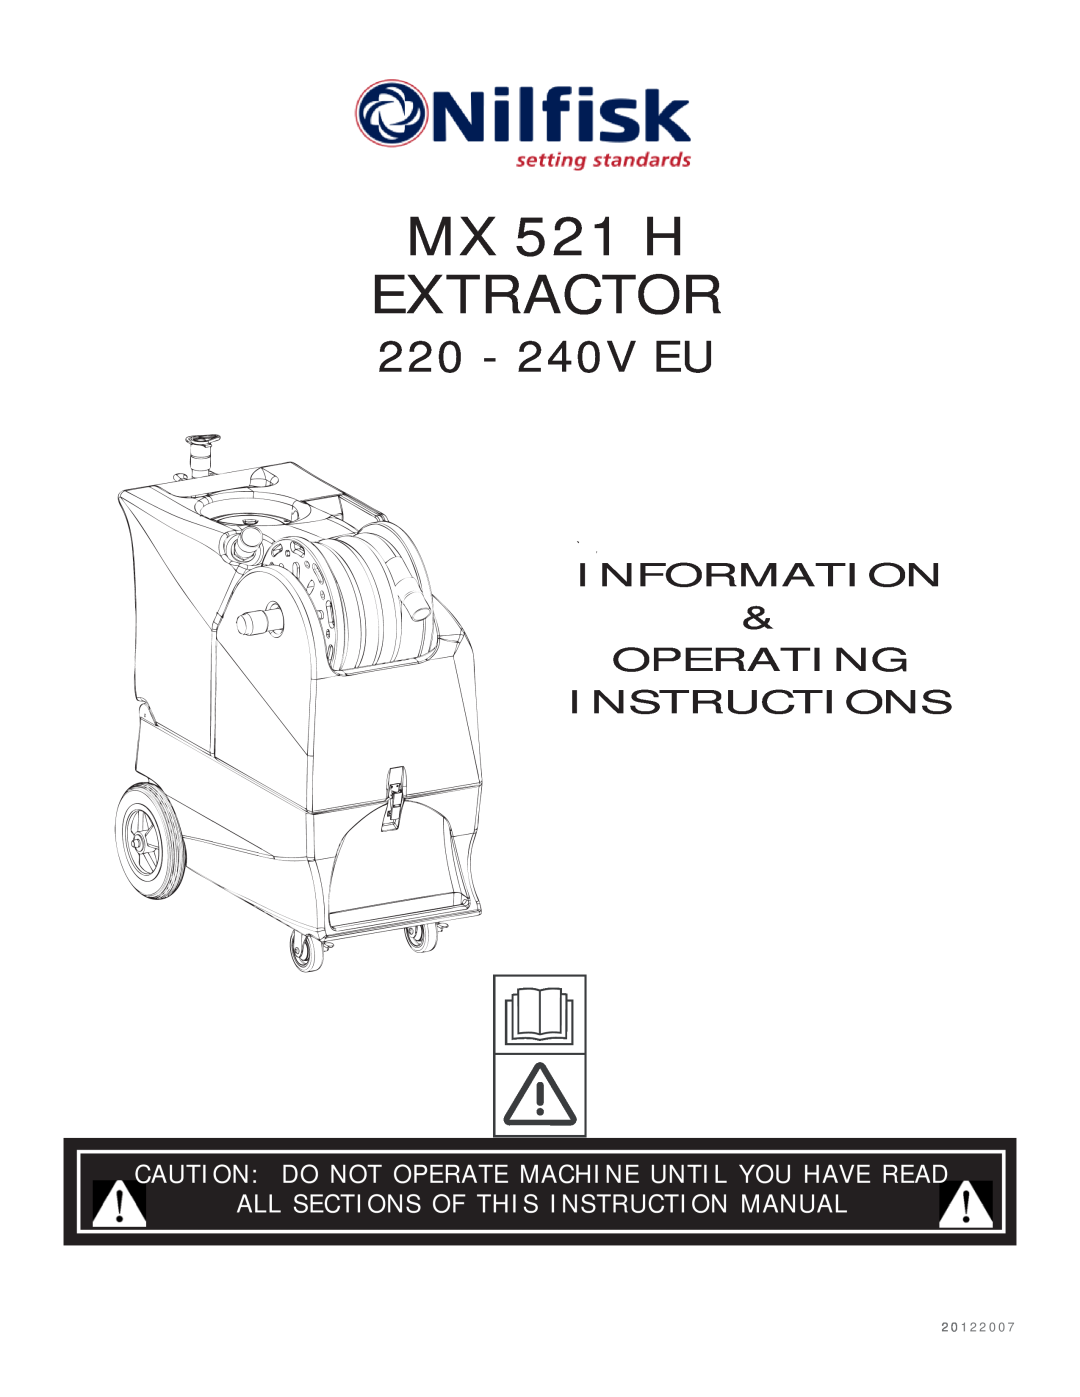 Nilfisk-ALTO manual Information & Operating Instructions, MX 521 H EXTRACTOR, 220 - 240V EU, 2 0 